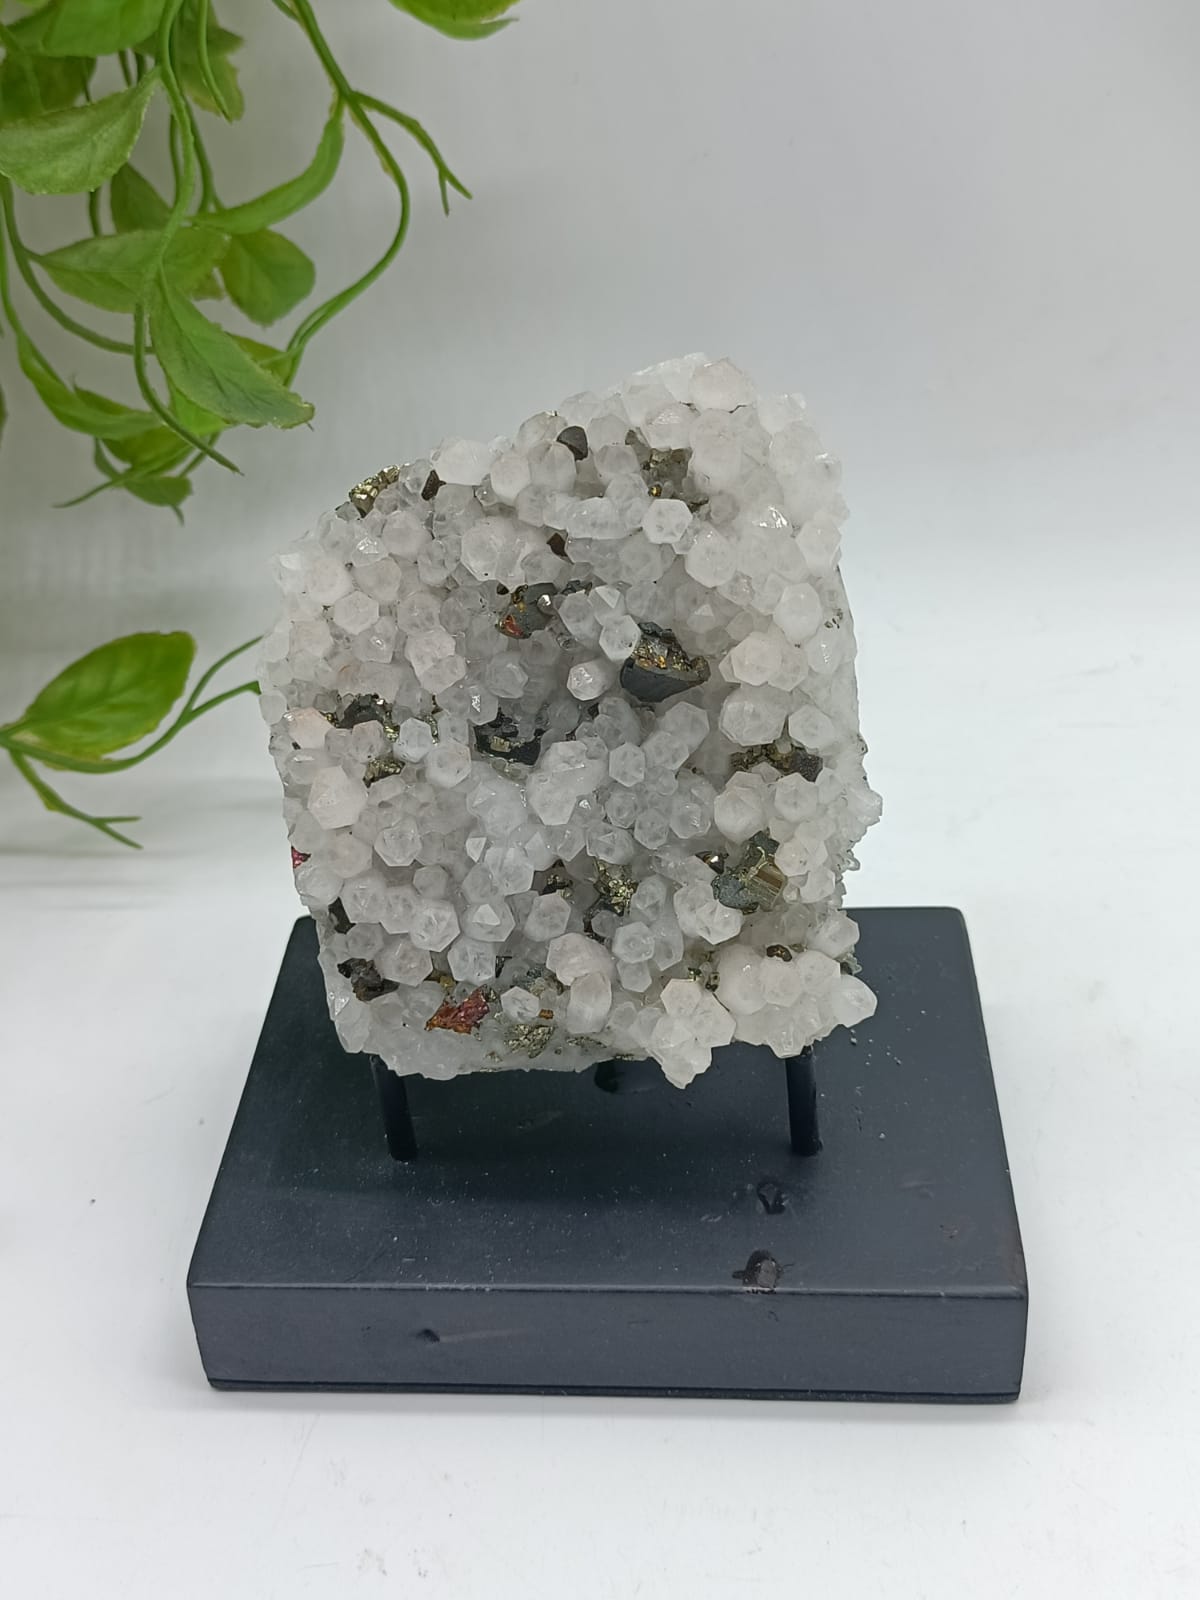 Natural Rare Chalcopyrite on Quartz Specimen 281g

